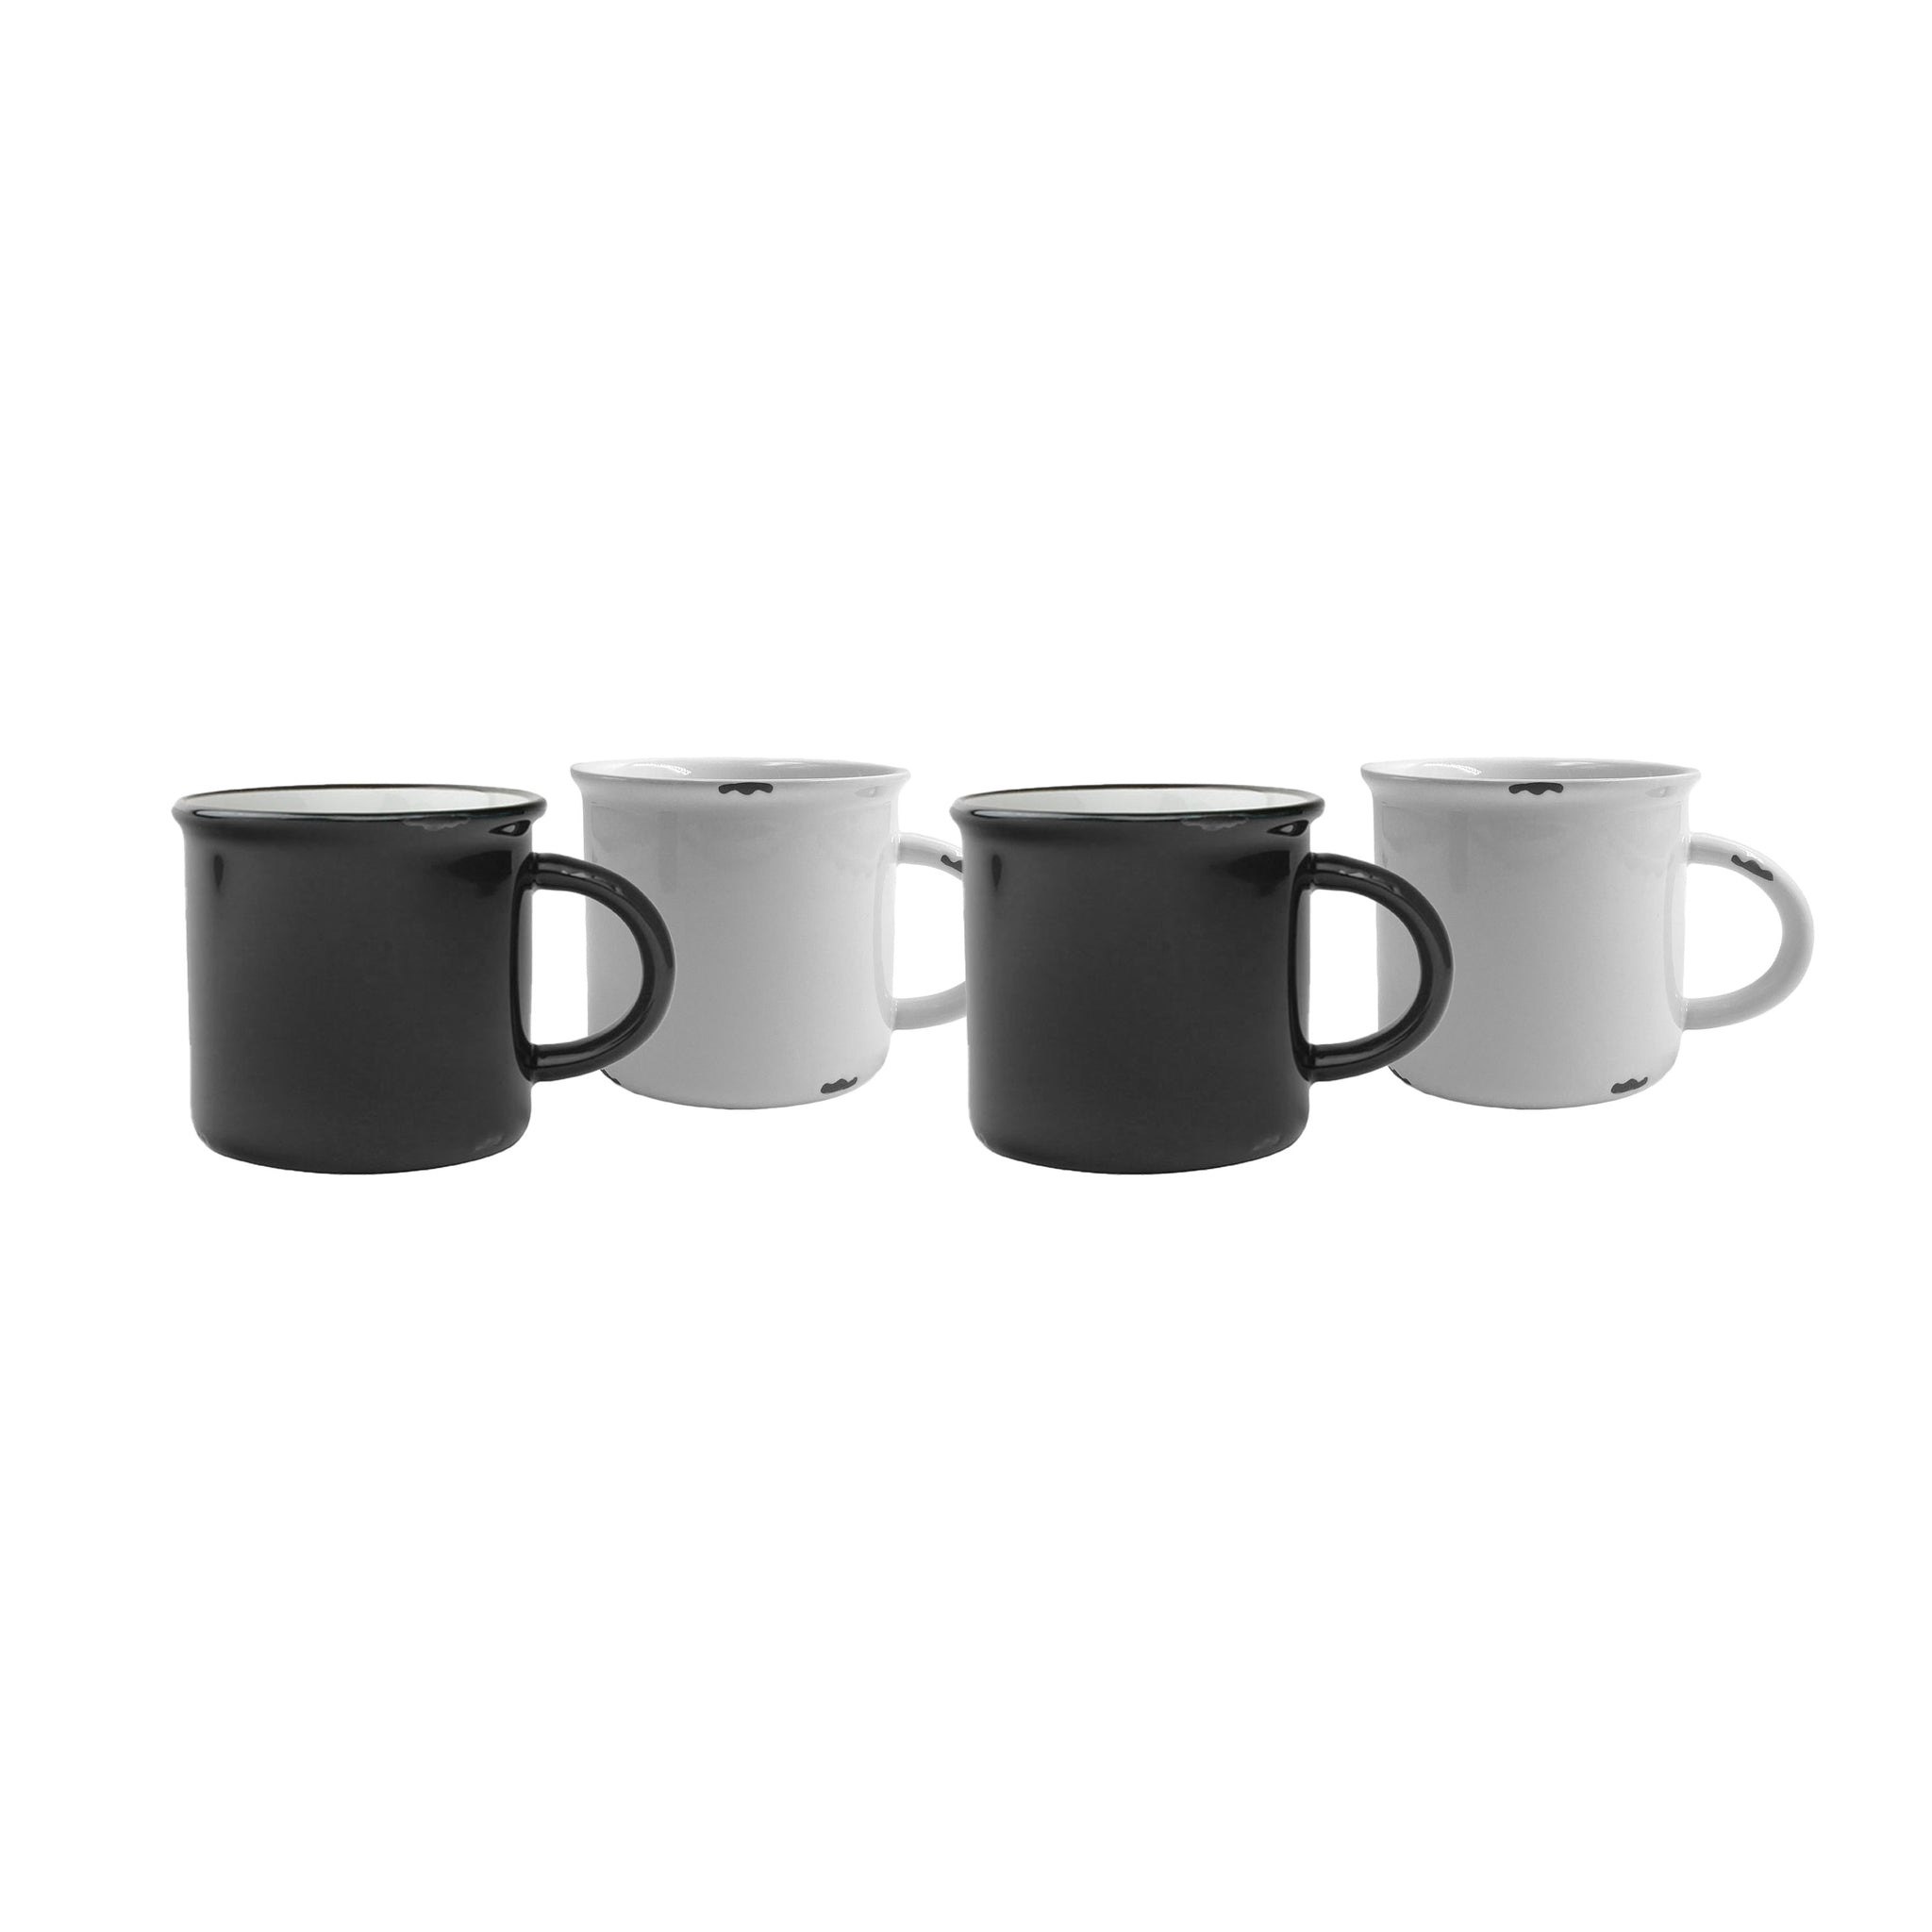 Tinware Mug Gift Set- Black & White